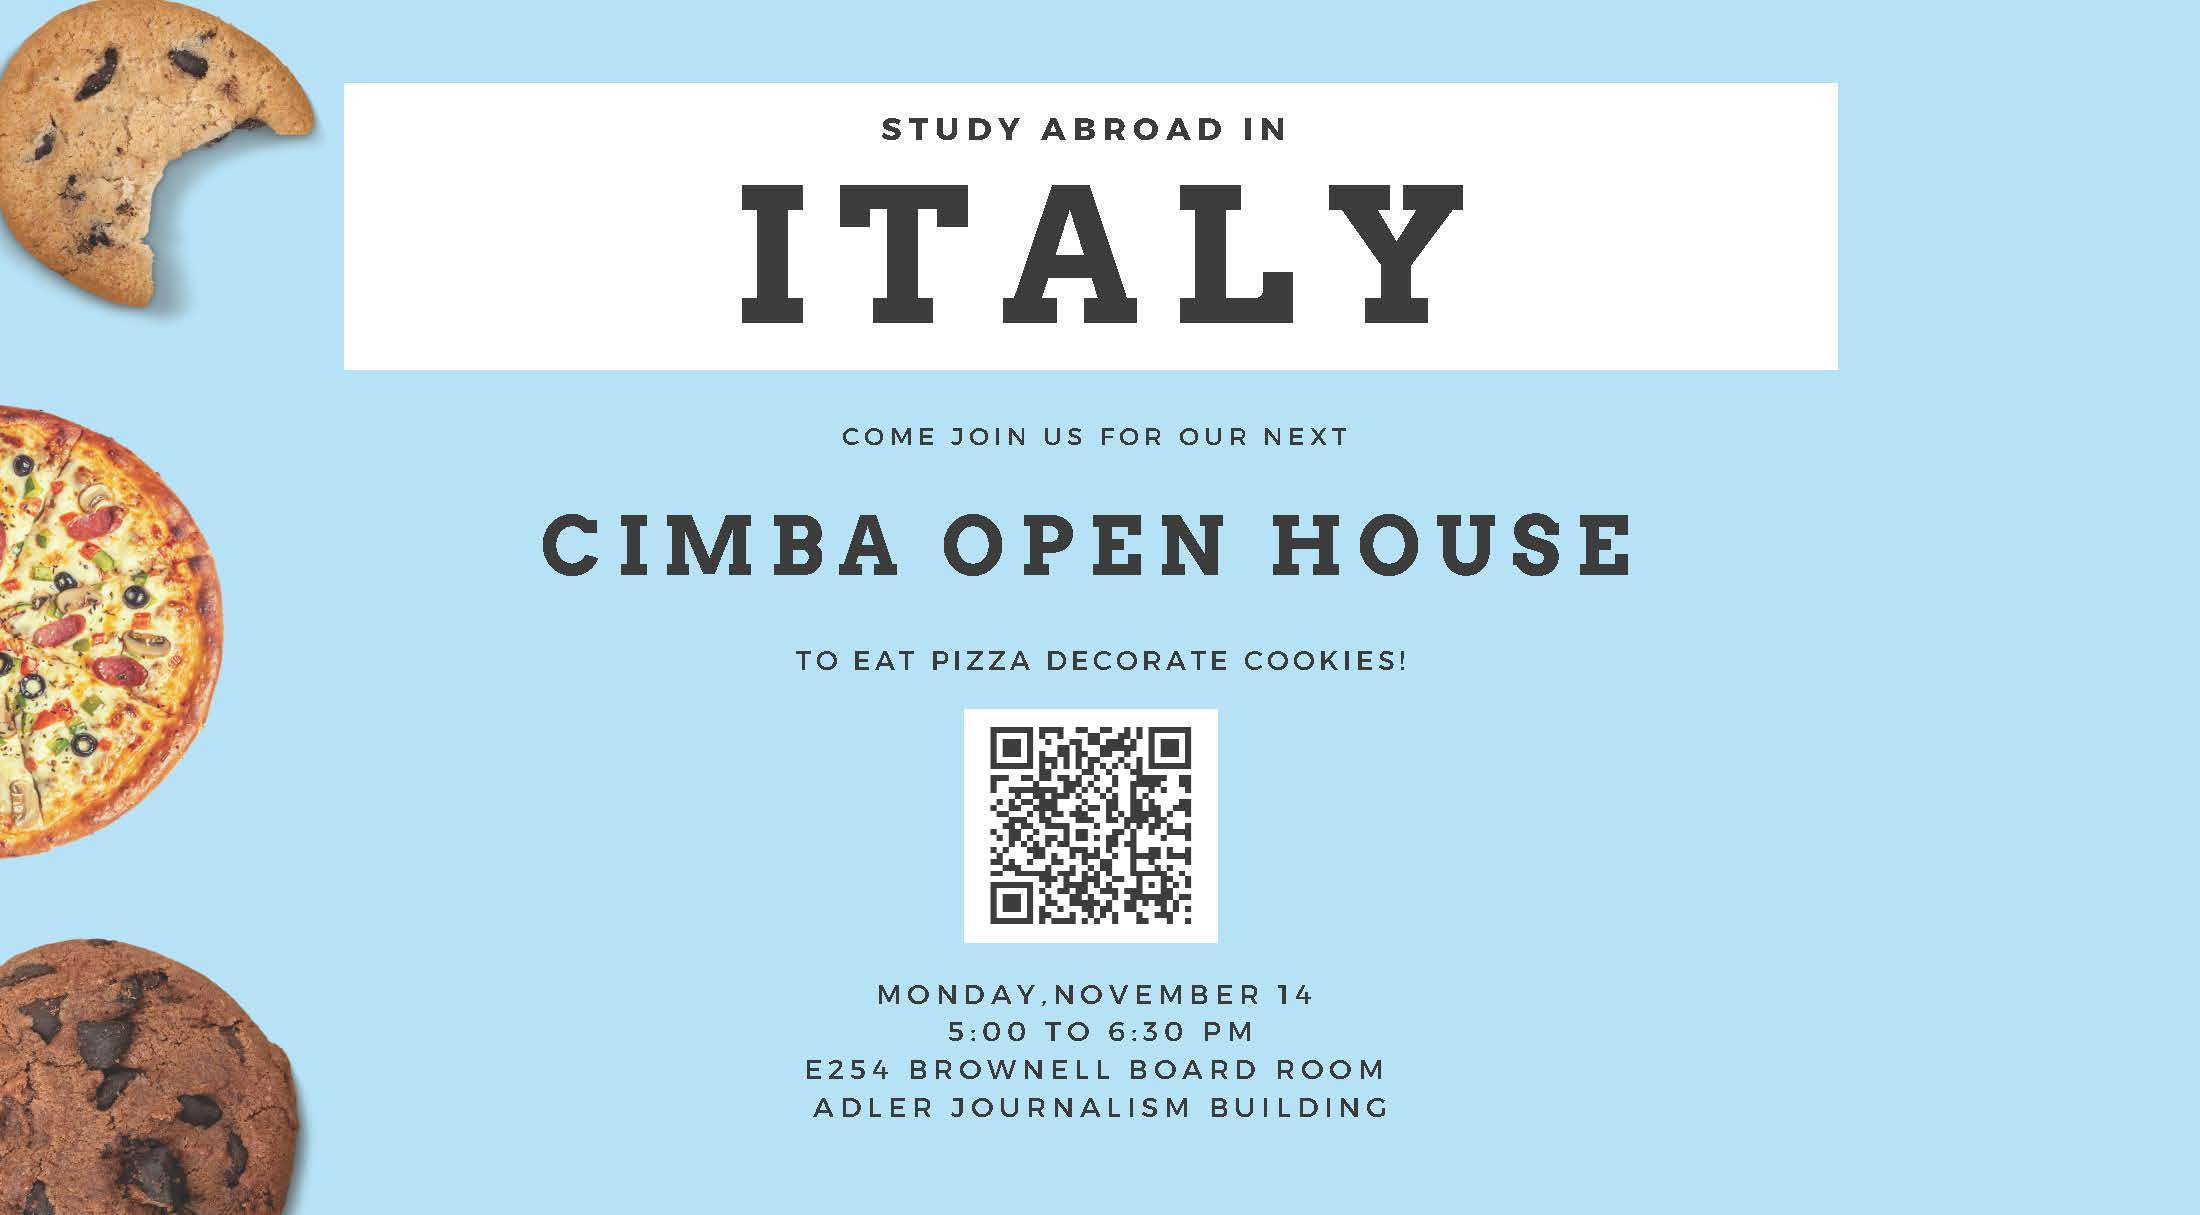 CIMBA Open House